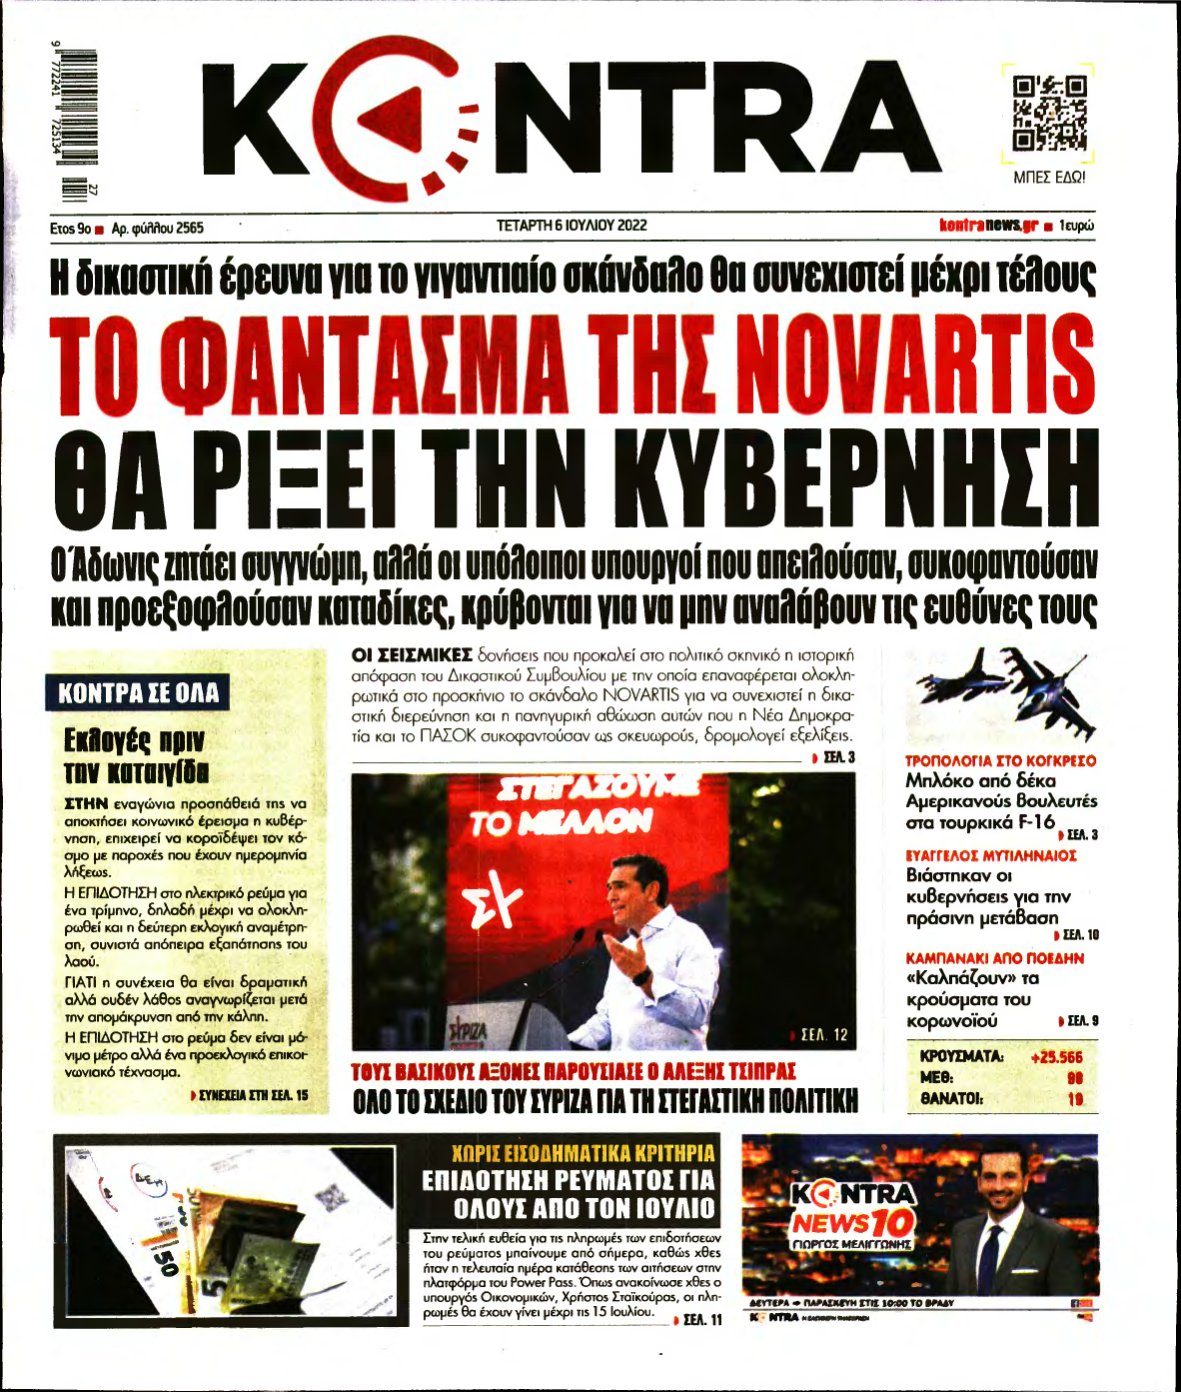 KONTRA NEWS – 06/07/2022